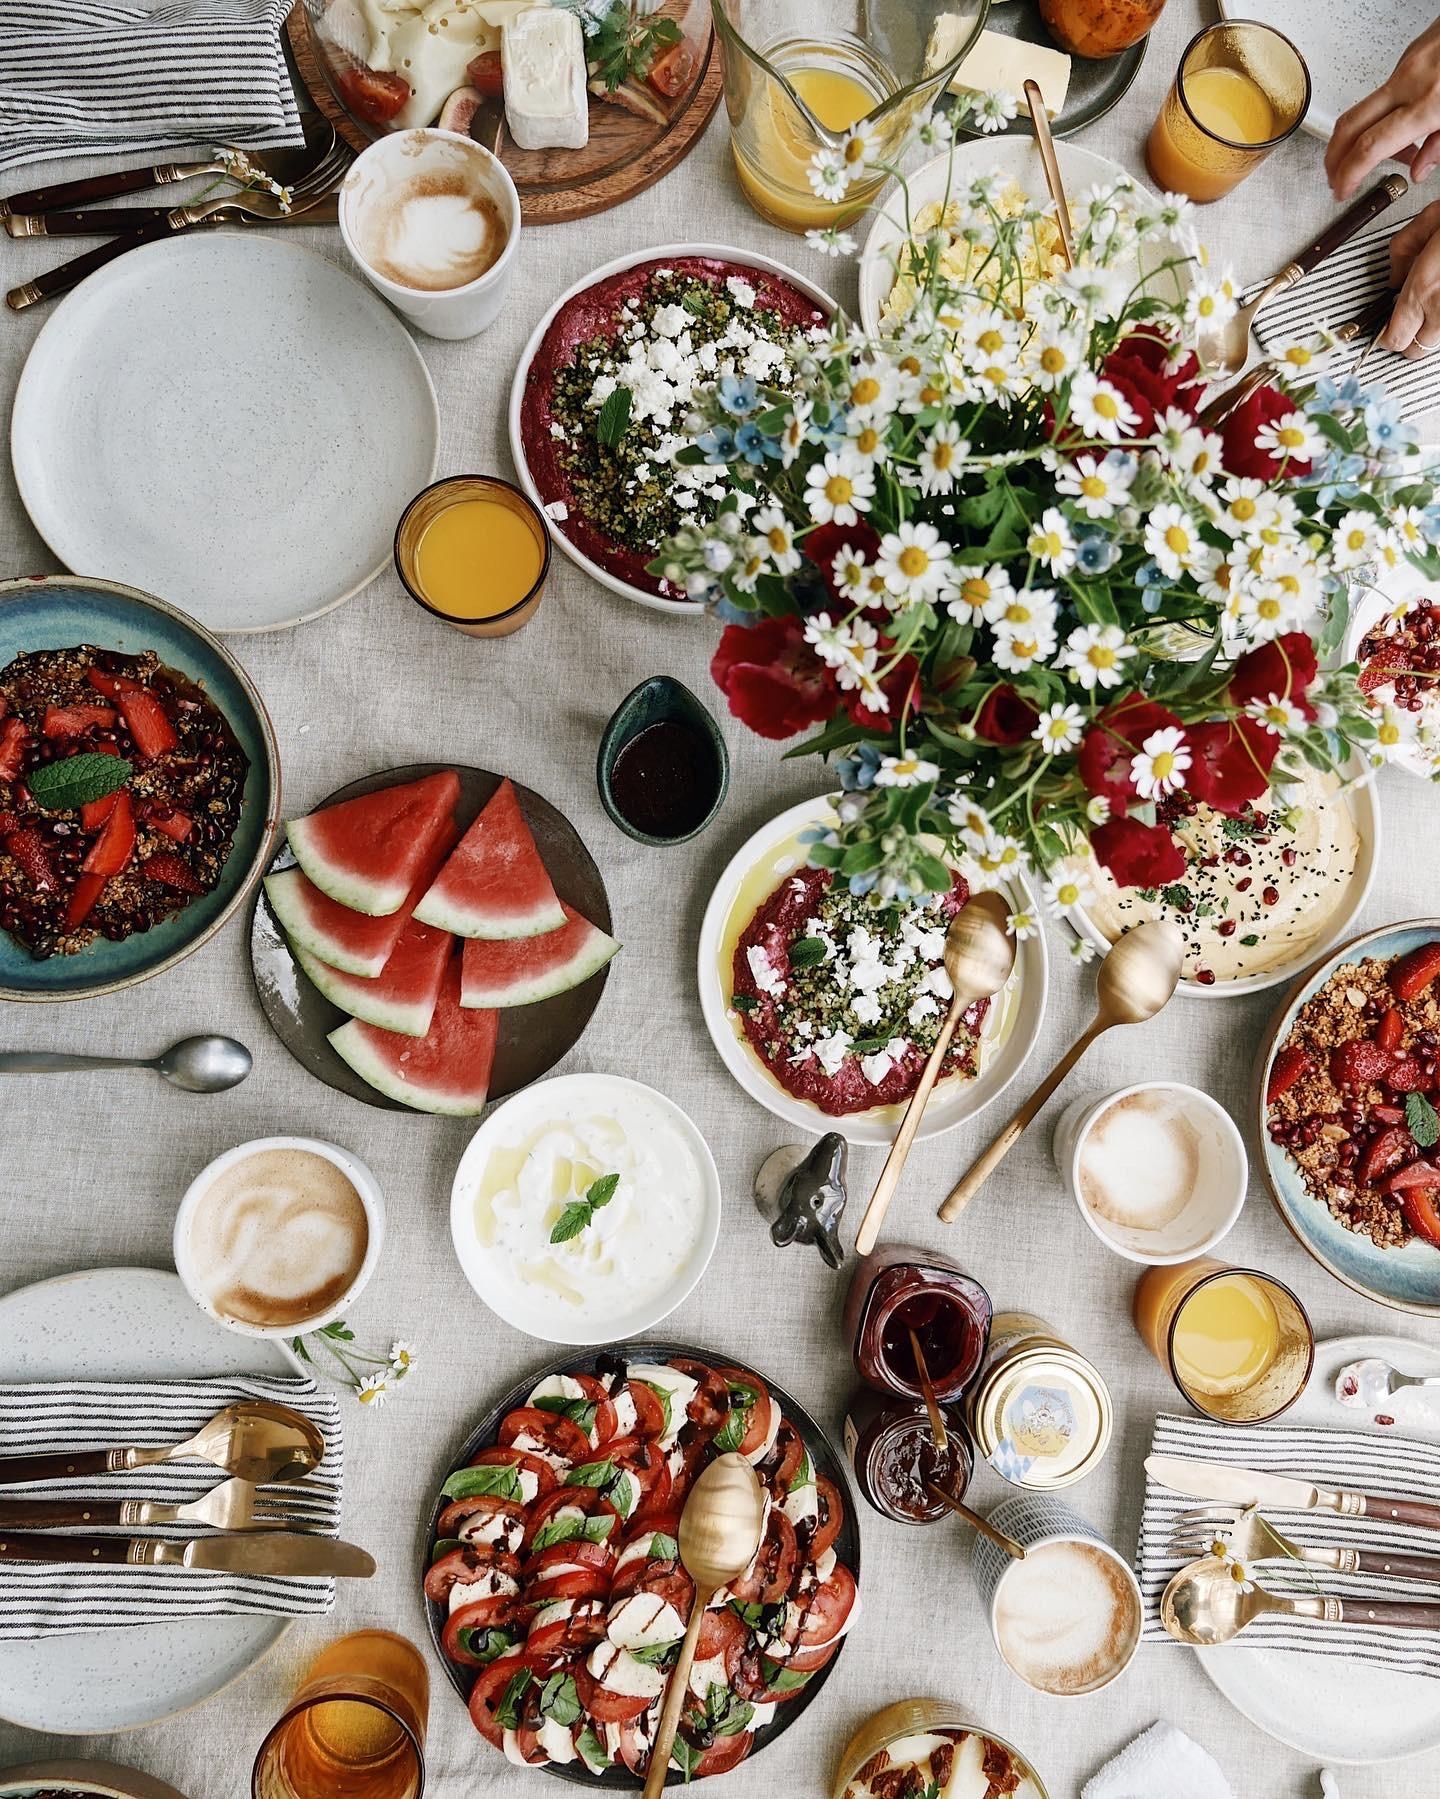 On the table #breakfast #foodie #summerfood #table 